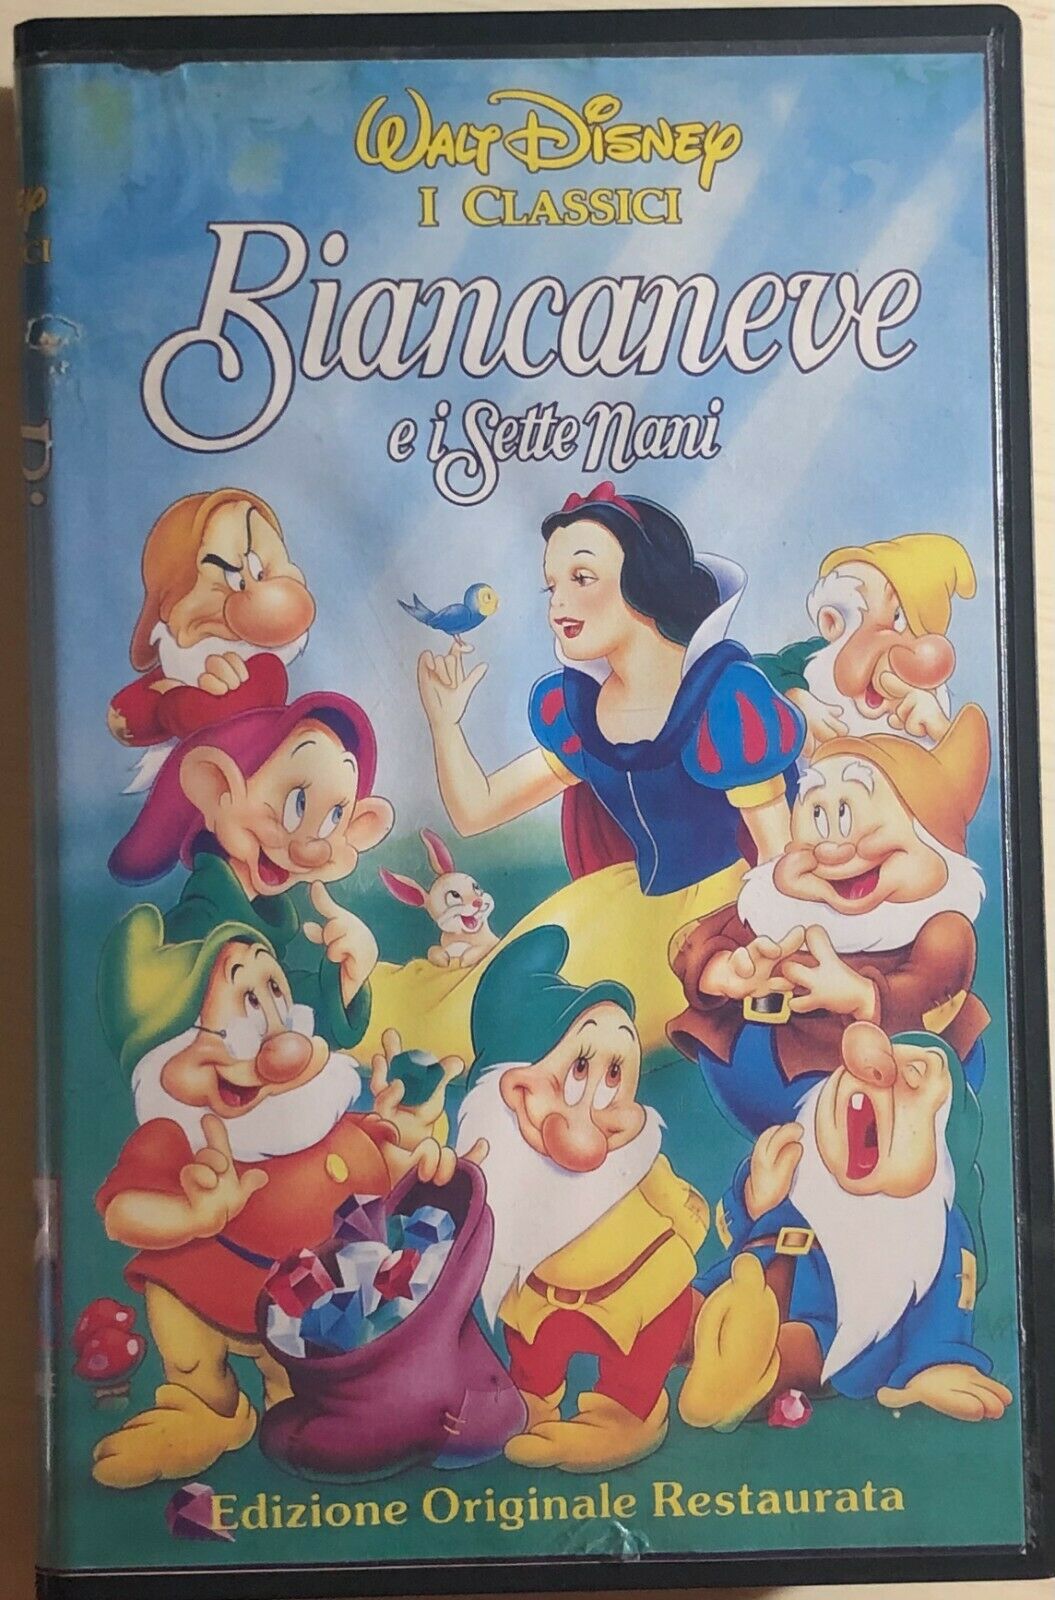 Biancaneve e i Sette nani VHS di Aa.vv.,  1937,  Walt Disney